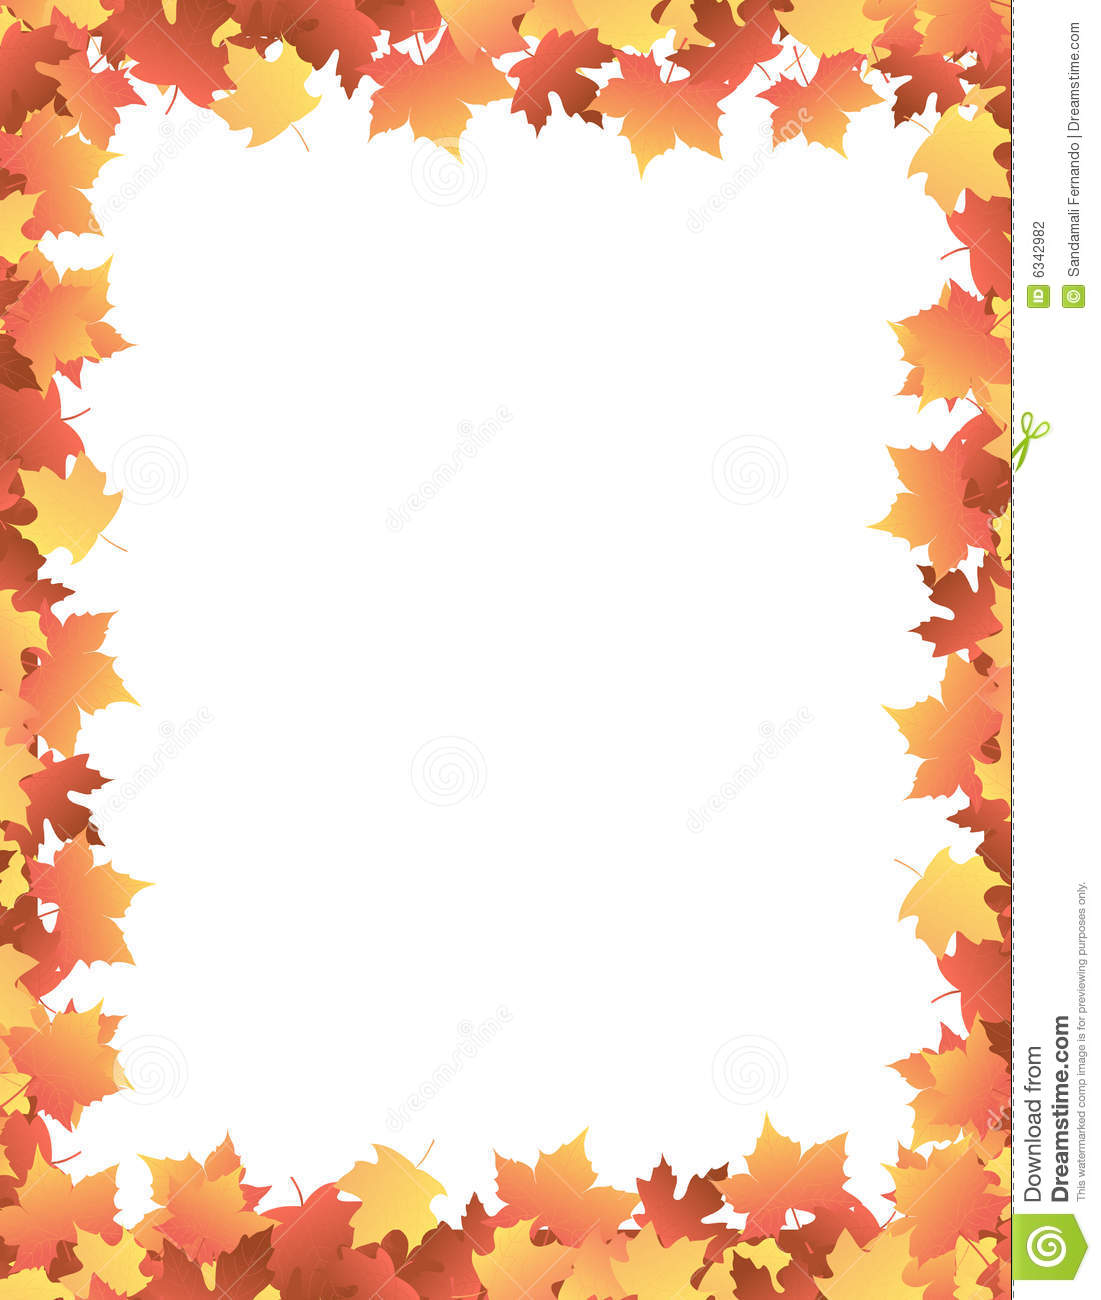 Autumn Borders Clipart - Clipart Kid